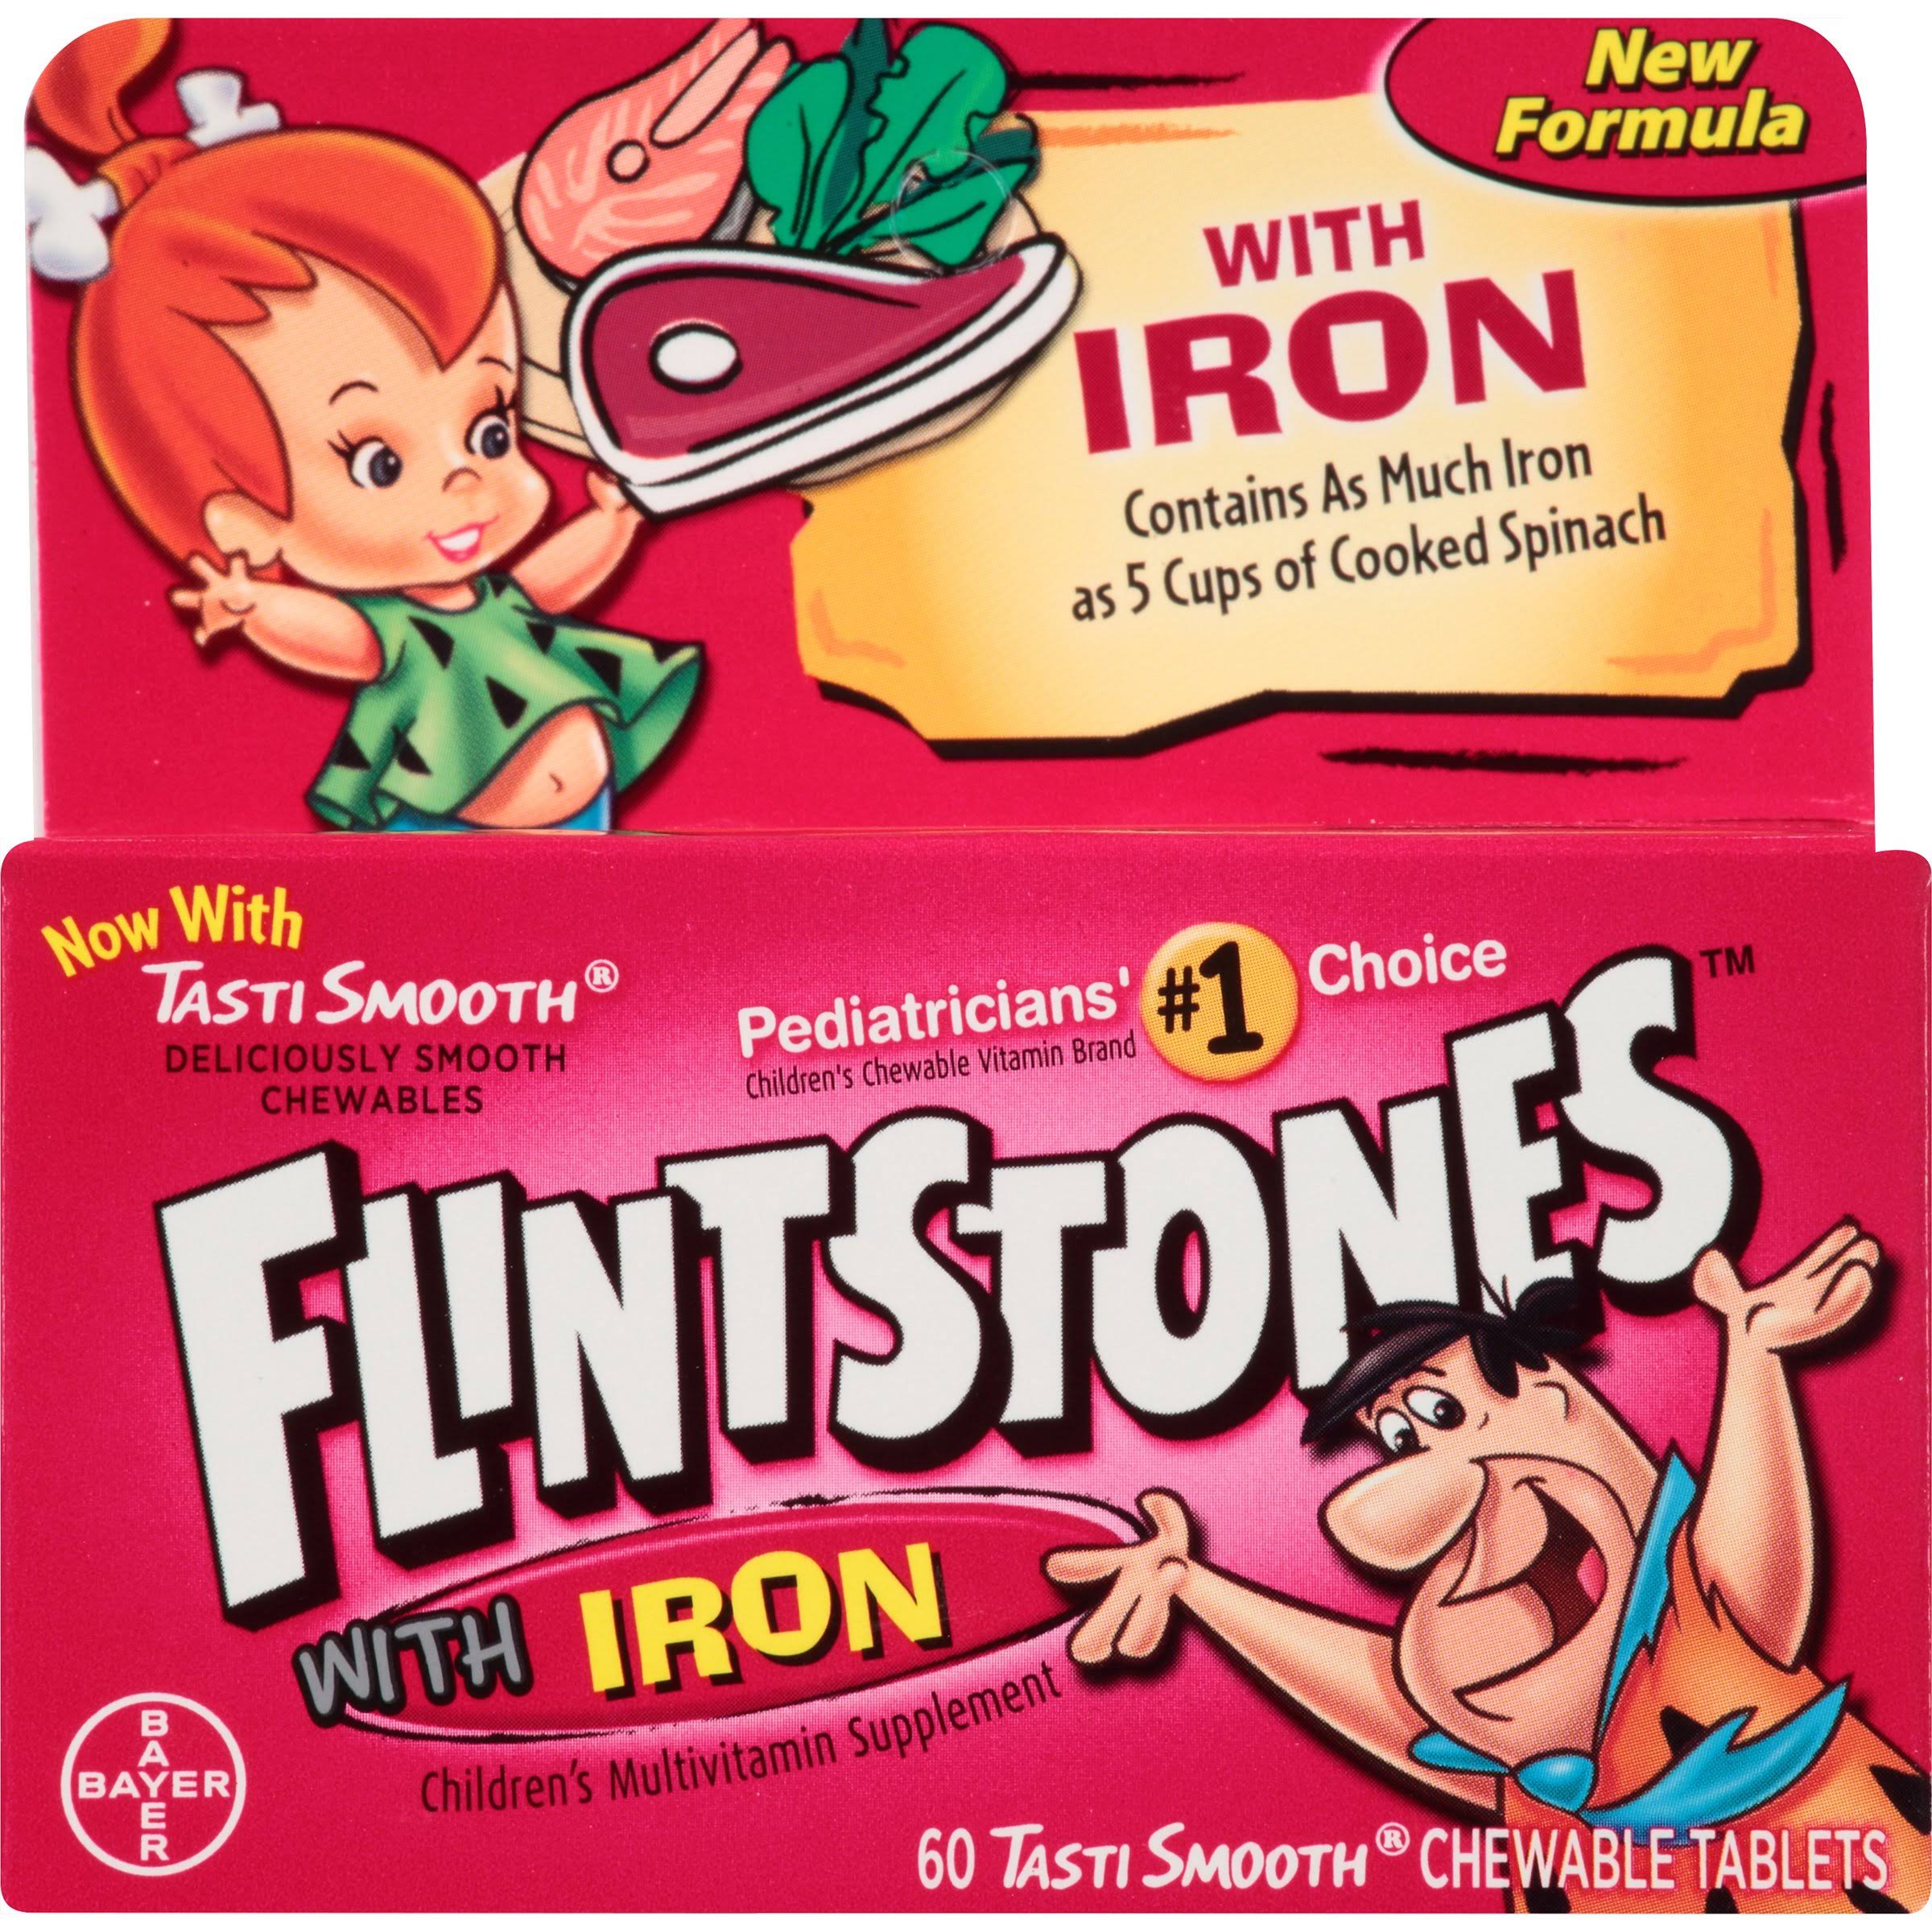 Flintstones Multivitamin with Iron Chewable Tablets - 60ct